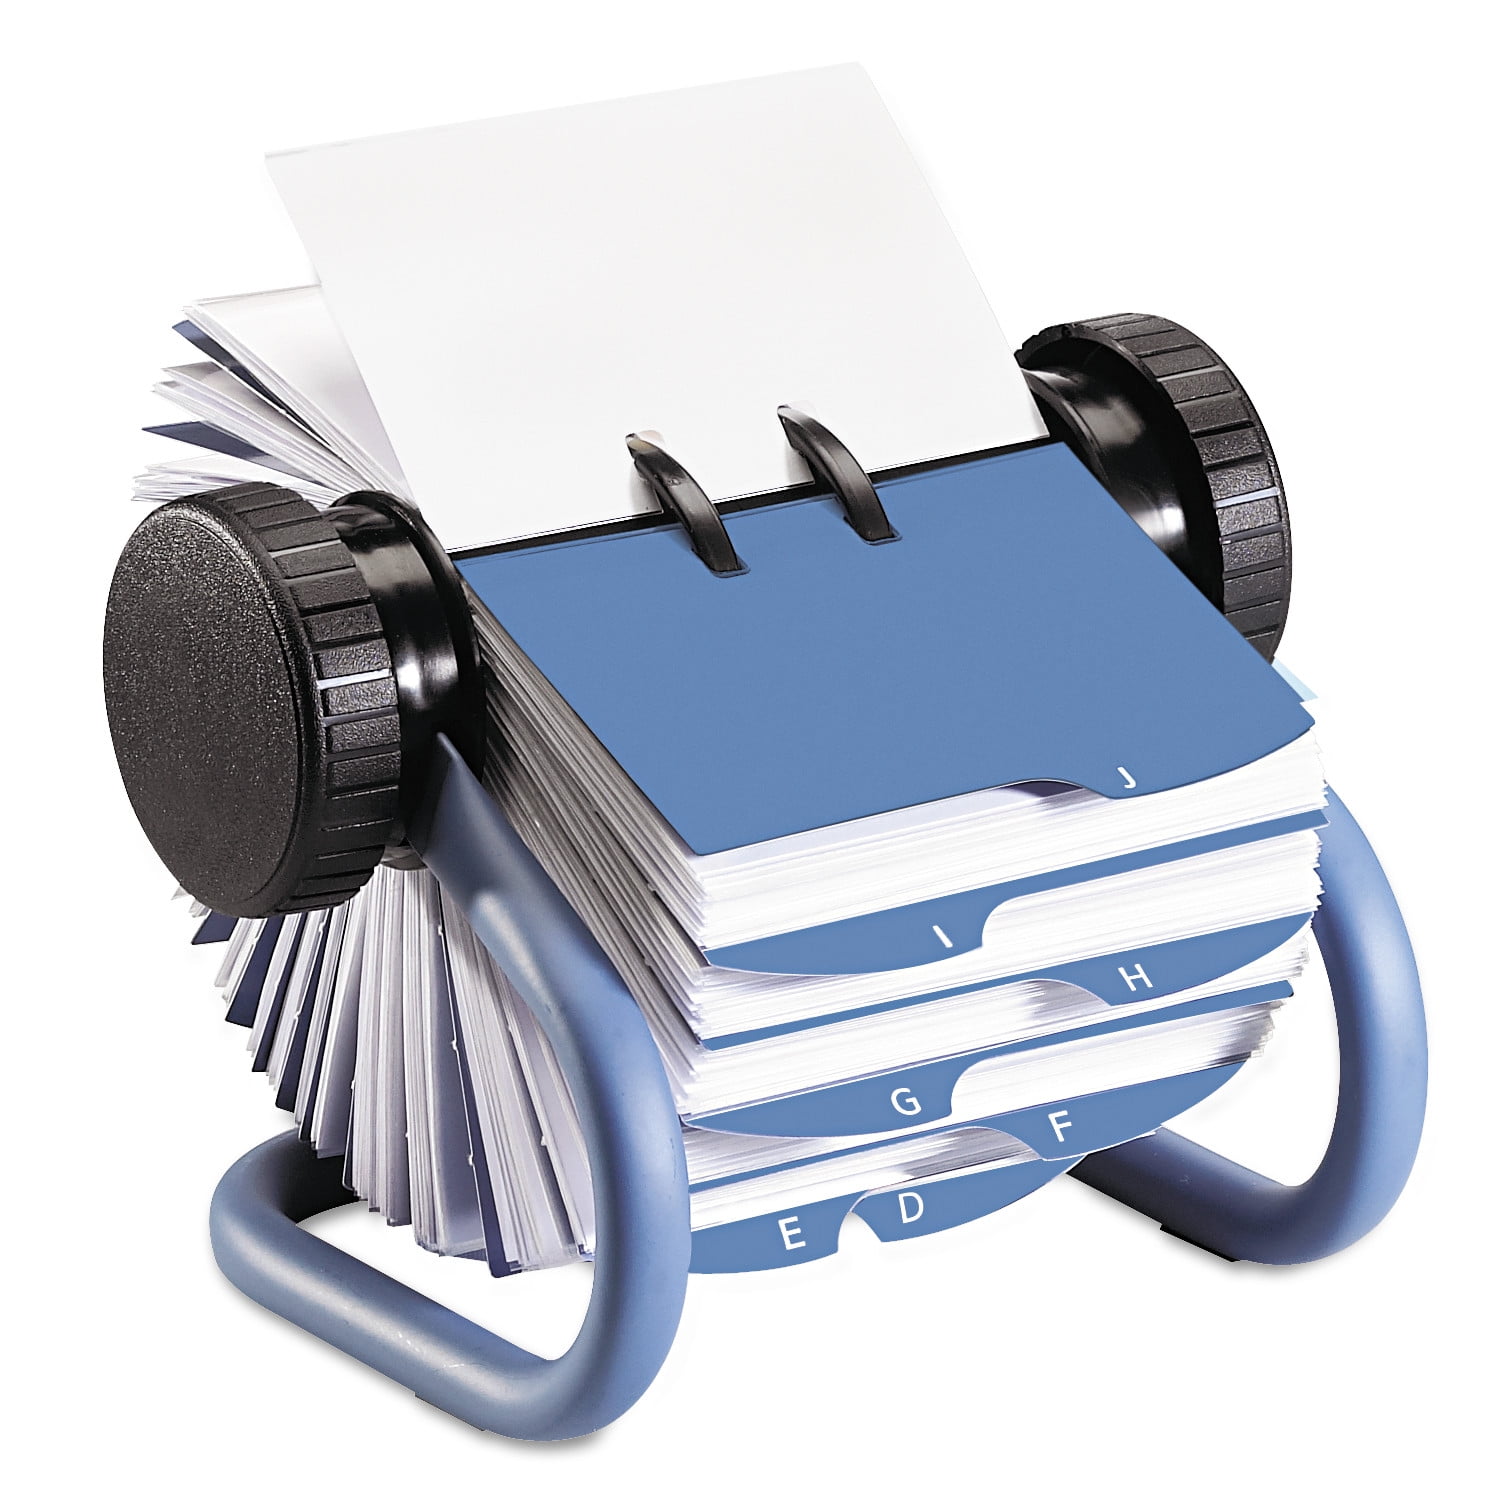 image-result-for-free-printable-memorydex-card-template-paper-crafts